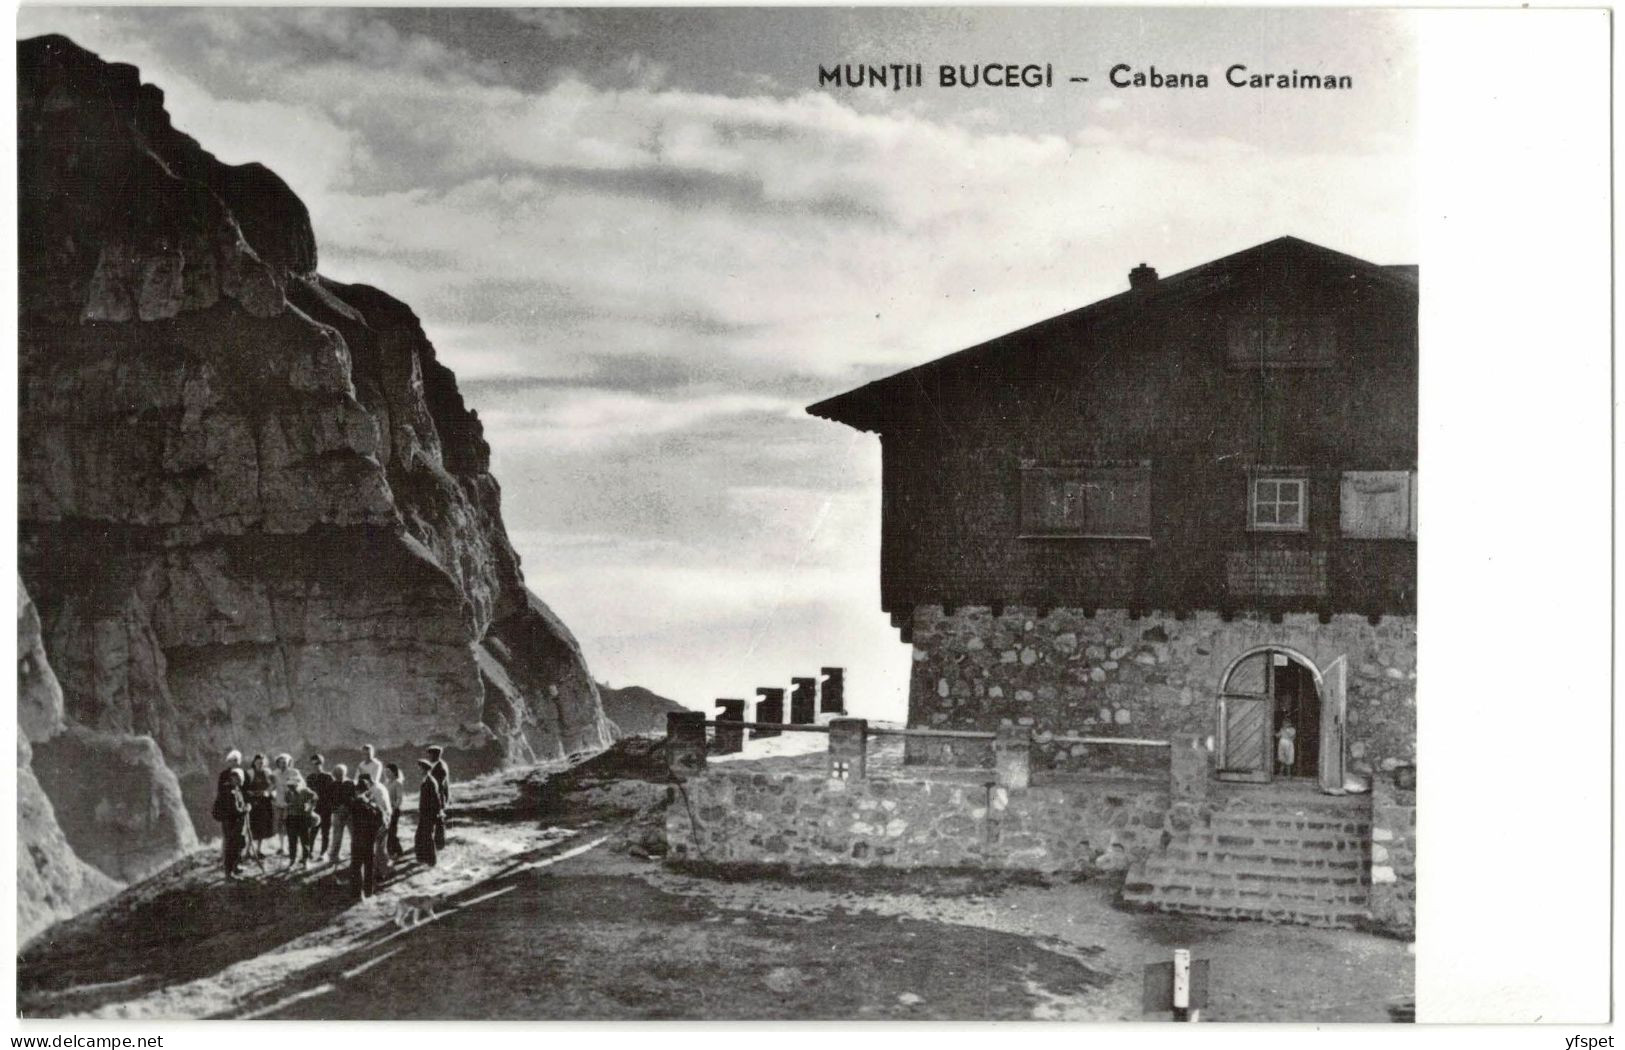 The Bucegi - Caraiman Chalet - Romania